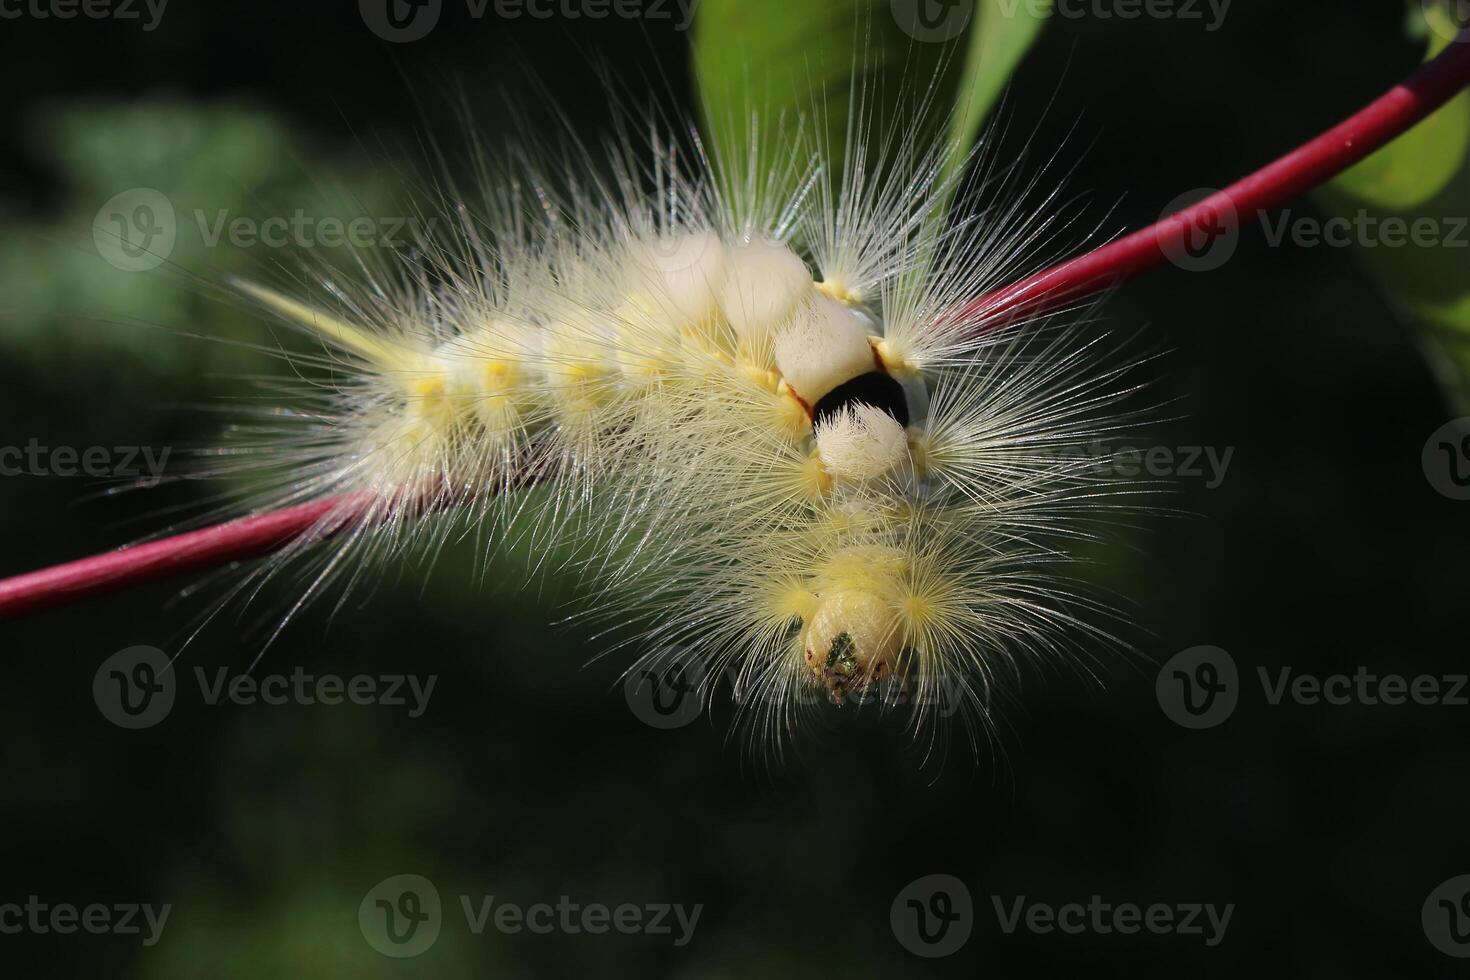 yellowish-white caterpillars crawling on a branch photo